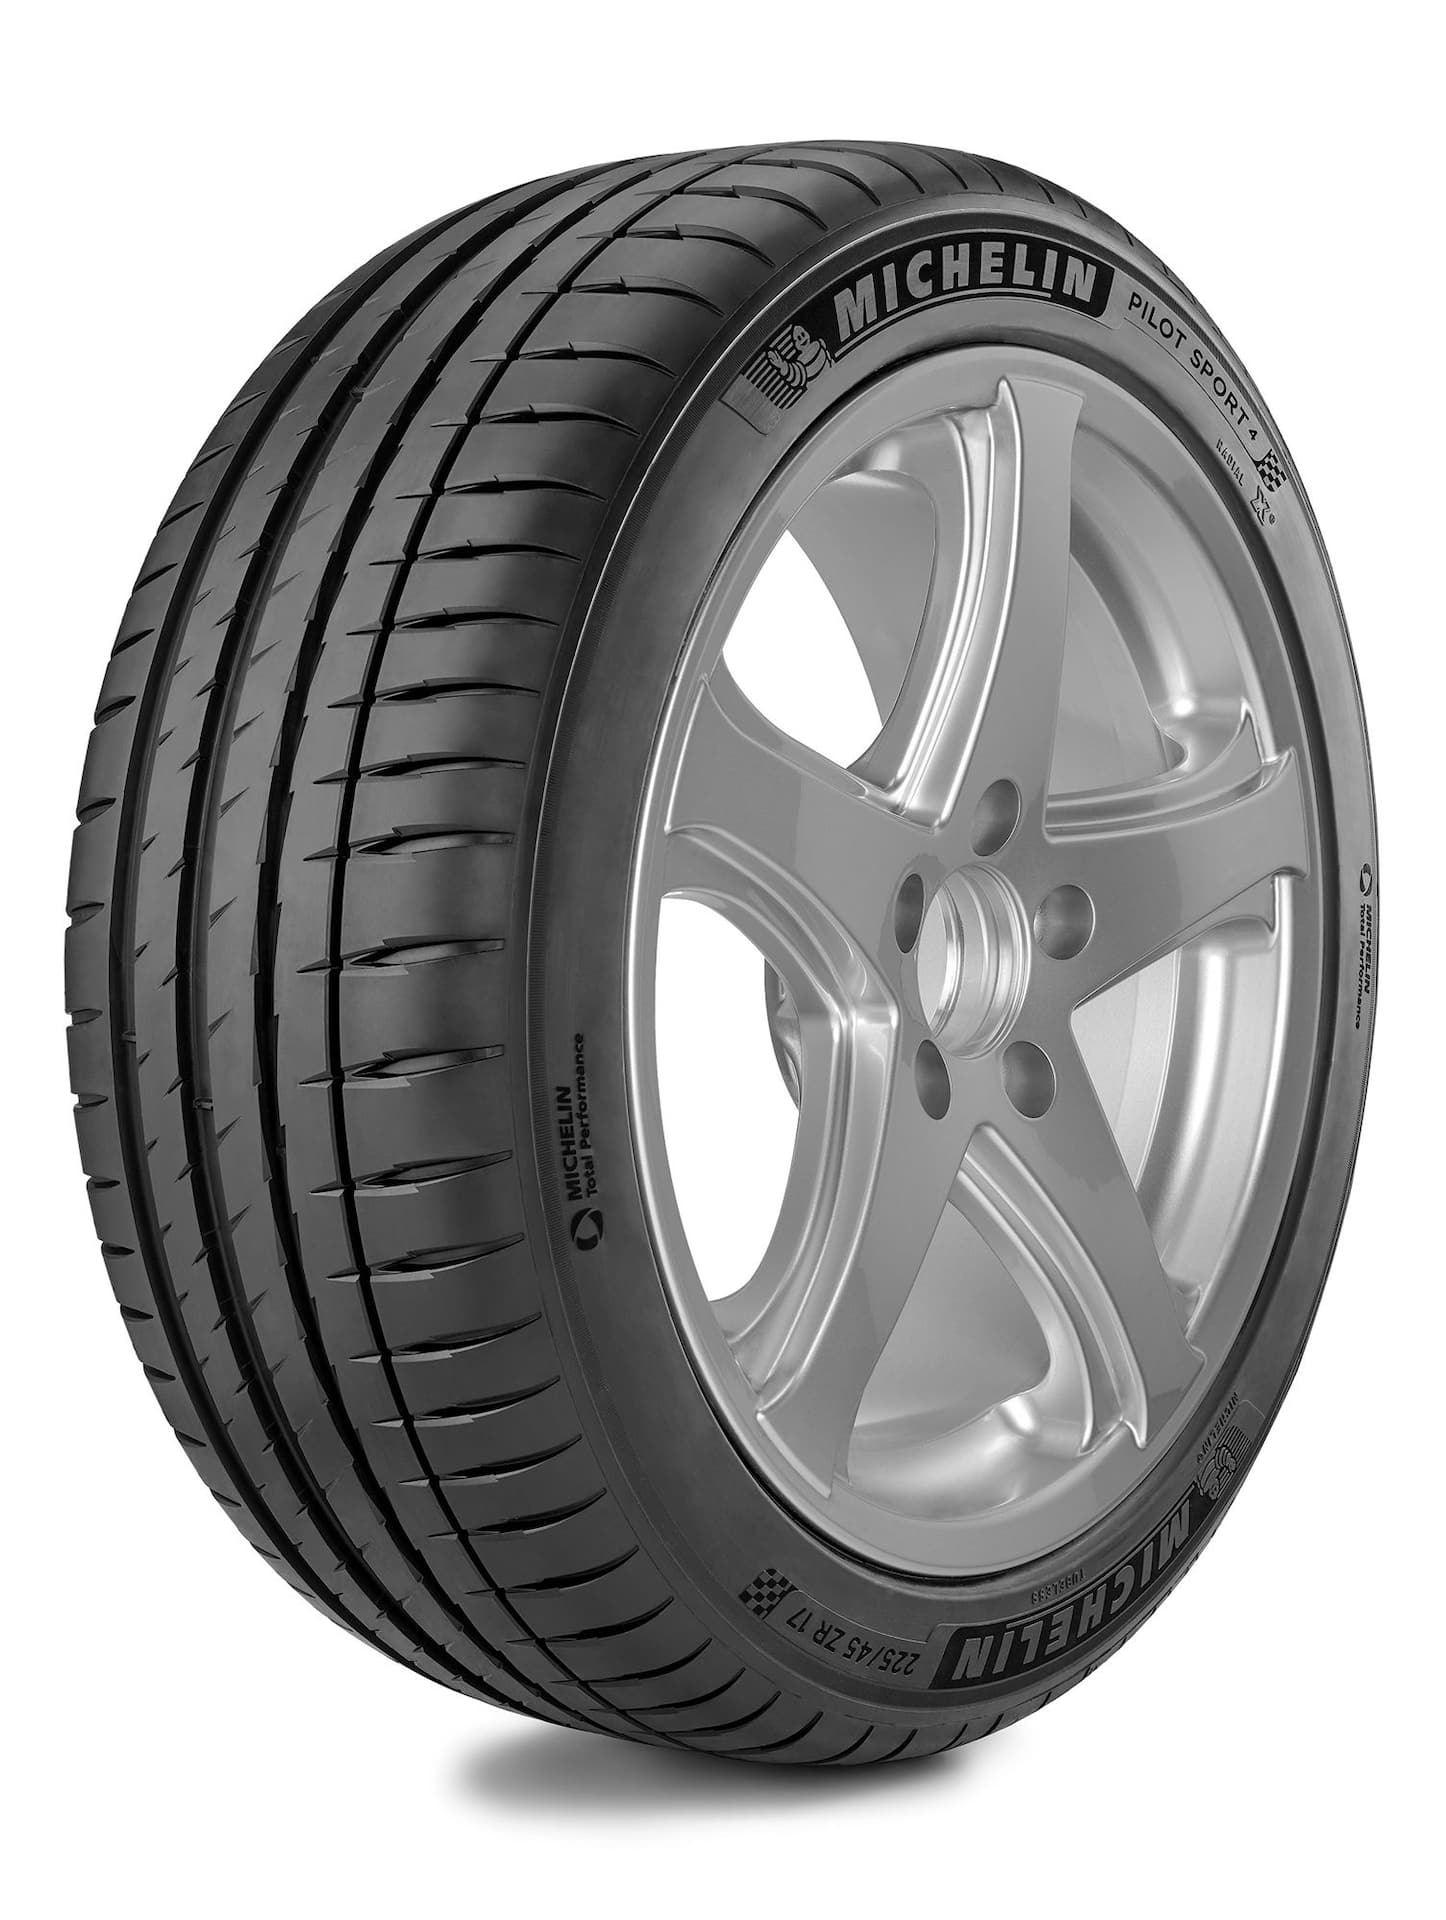 Michelin Pilot Sport 4 Performance Tire For Passenger & CUV